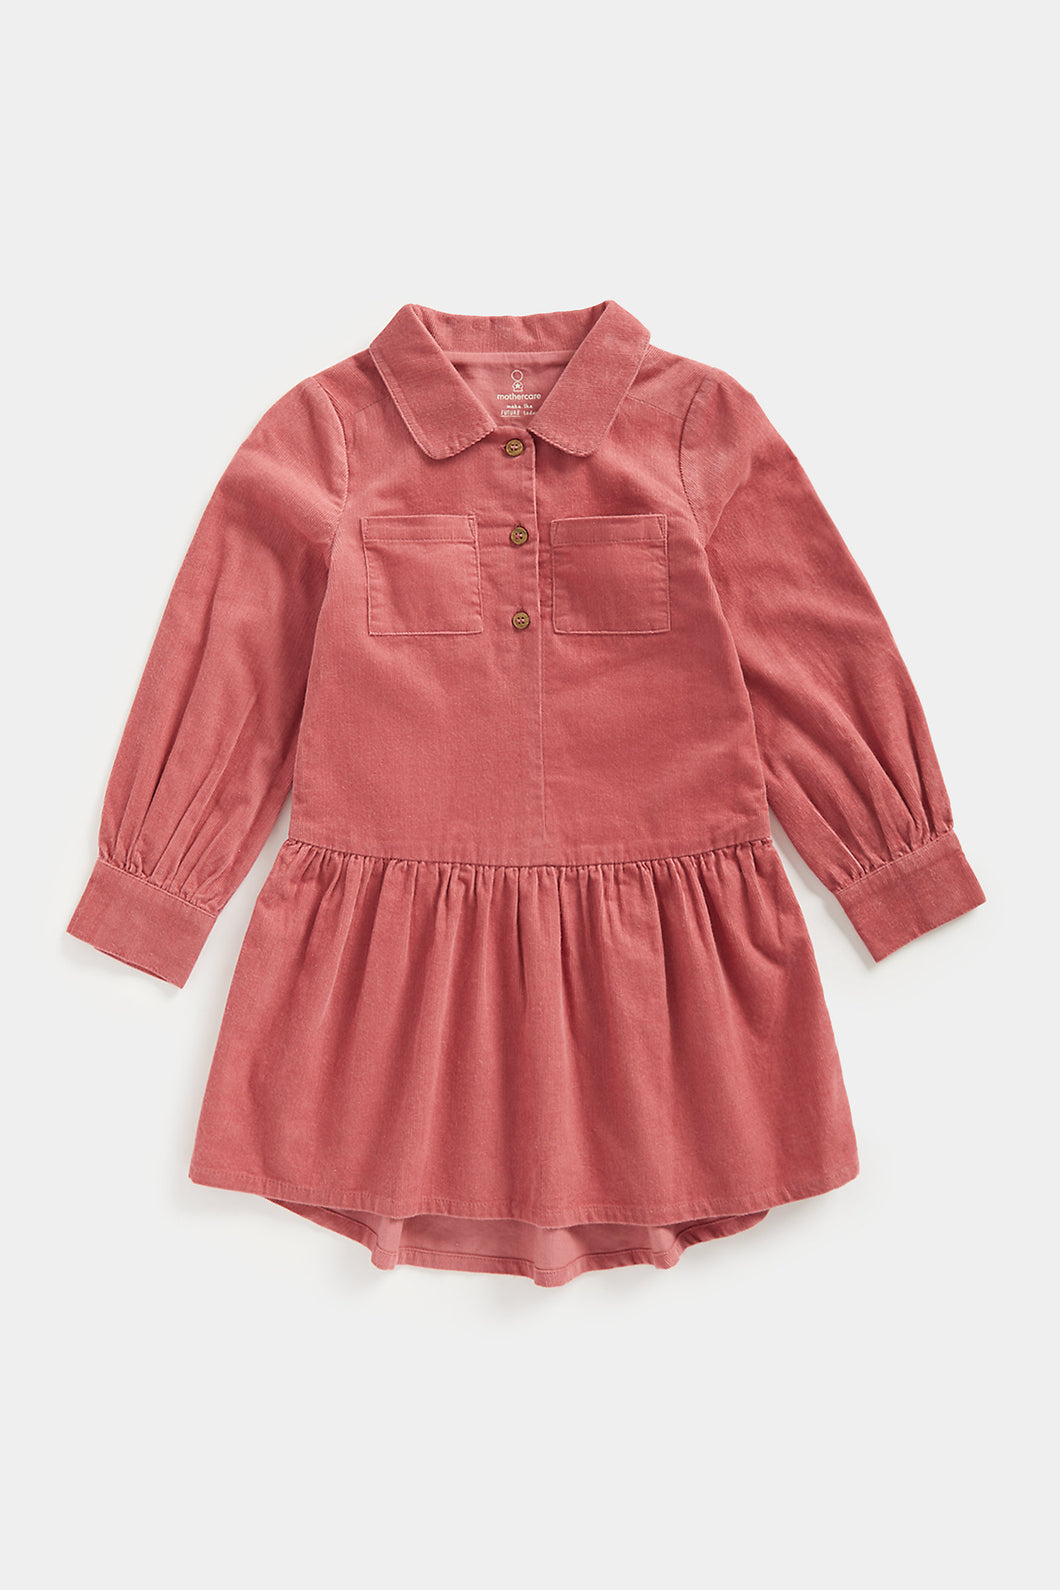 Mothercare Coral Cord Shirt Dress